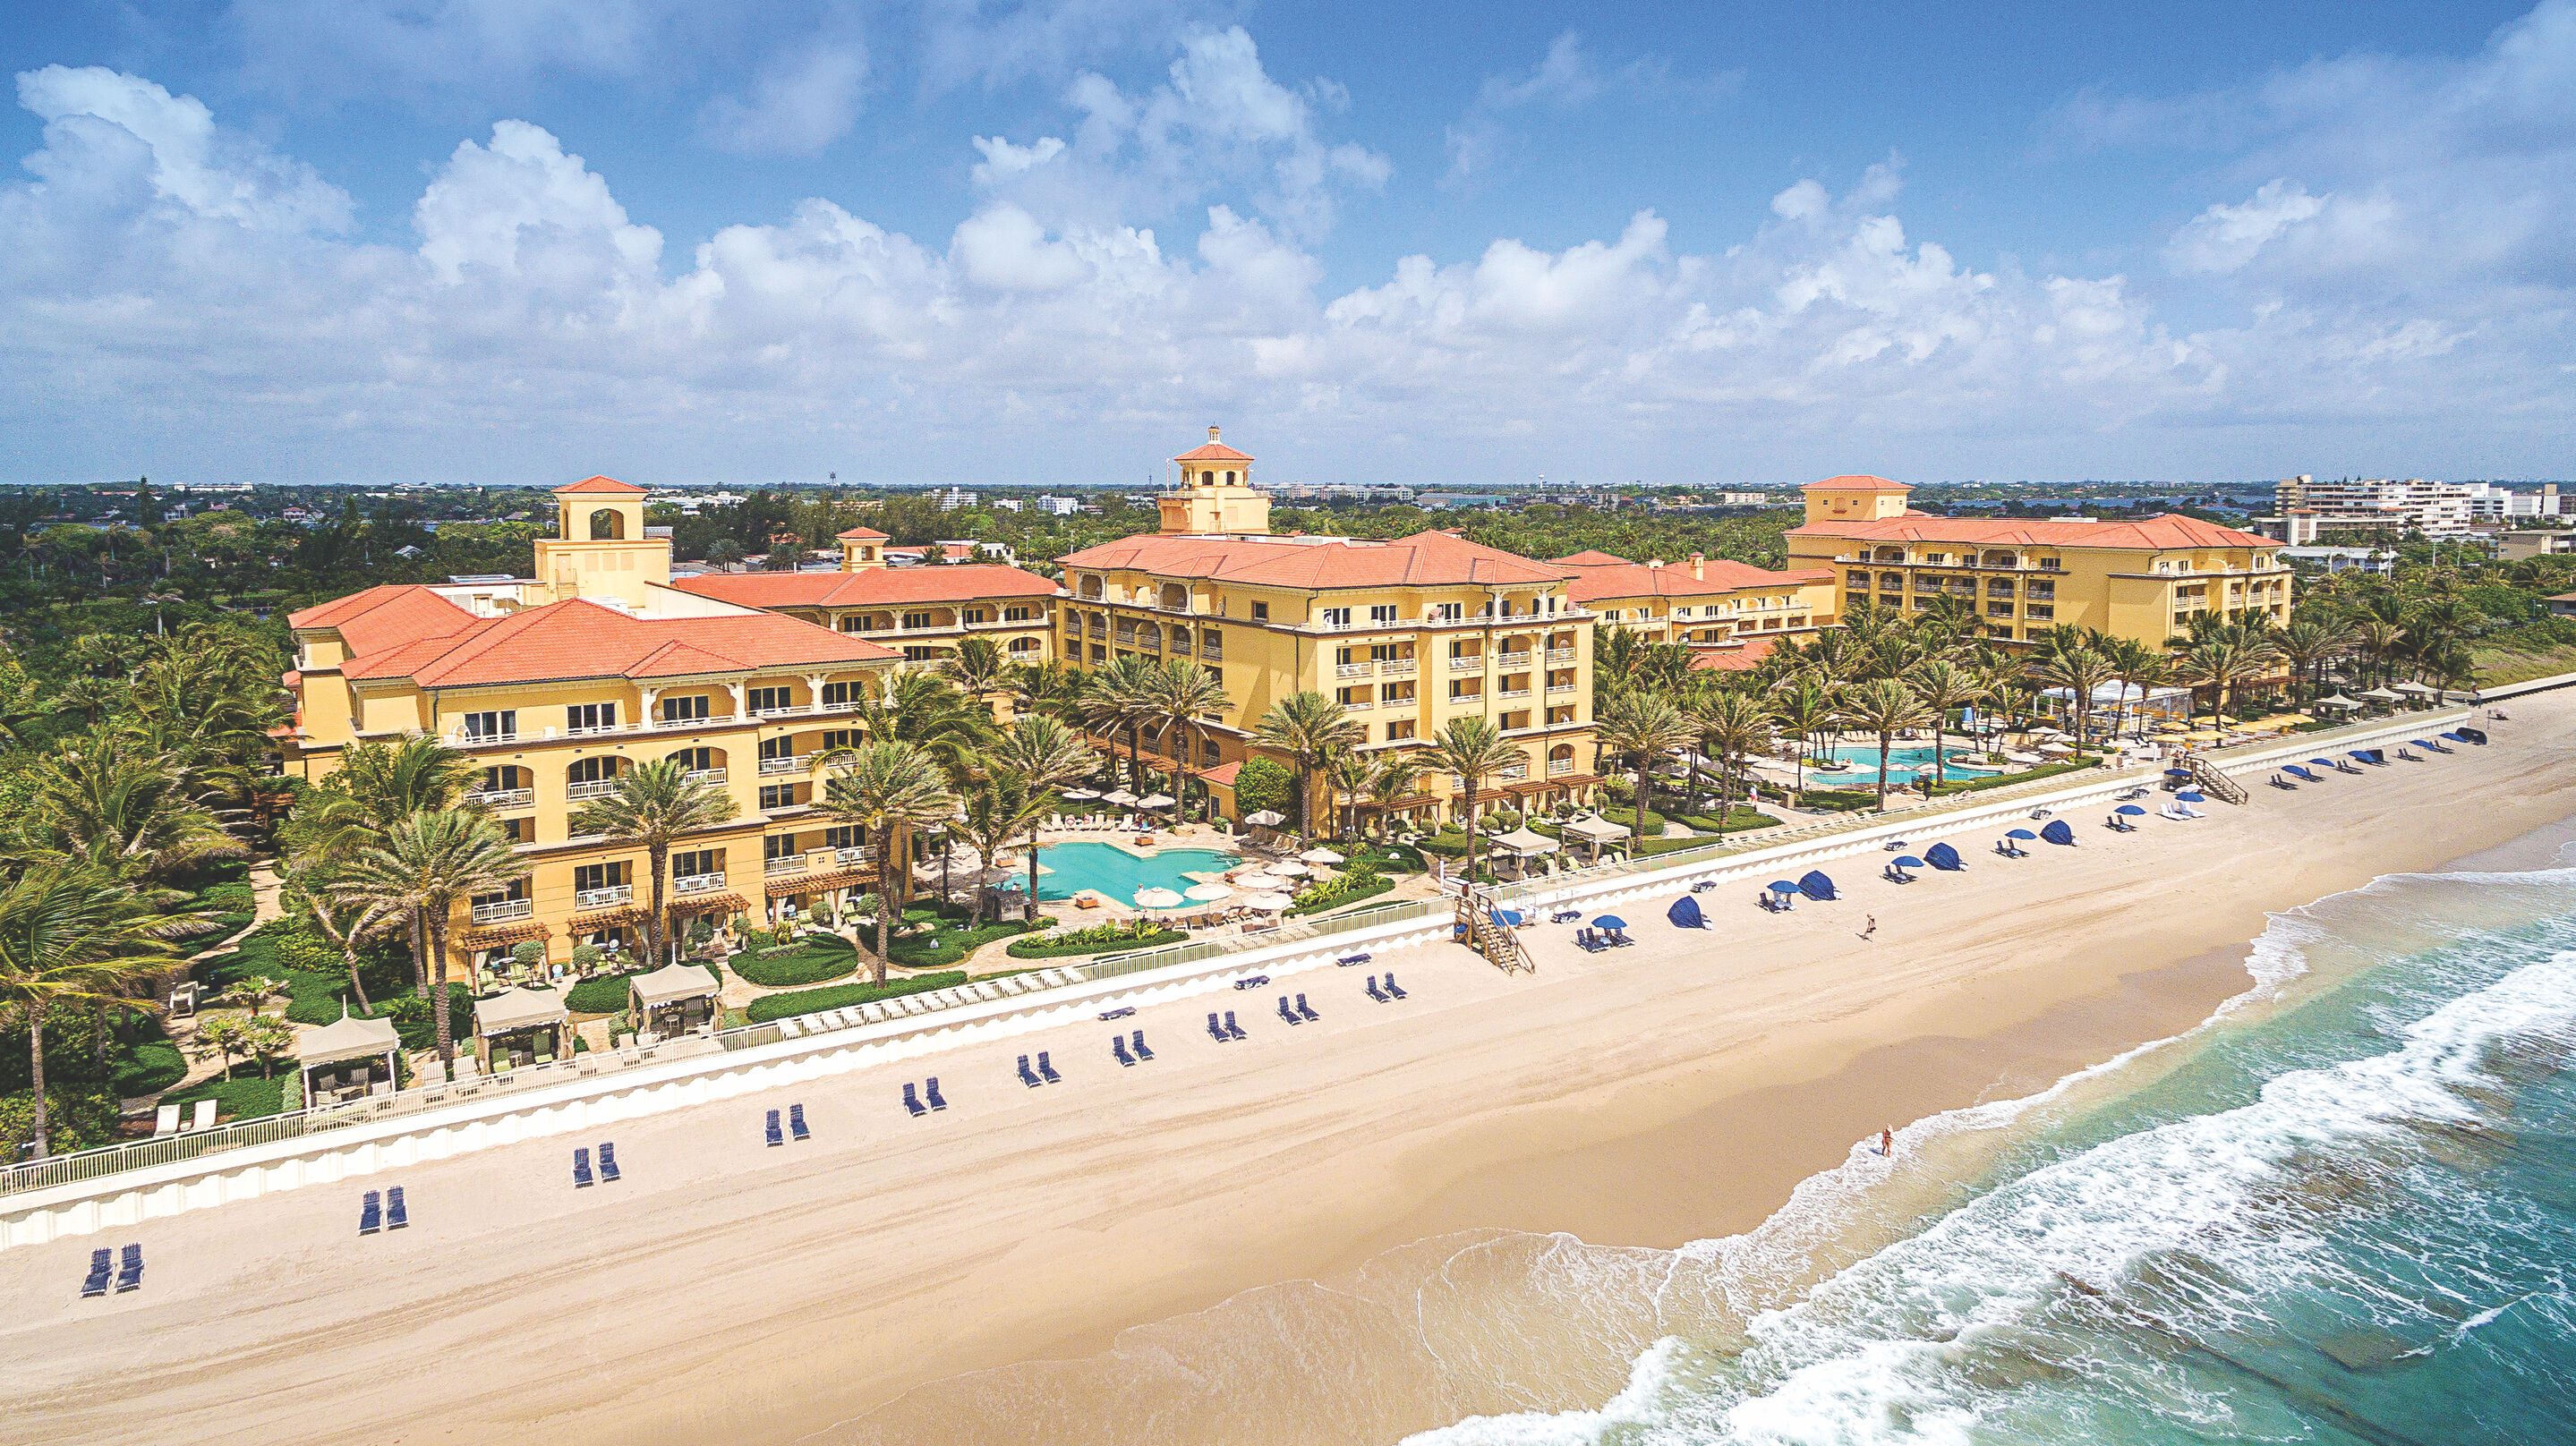 5 star hotels in palm beach florida